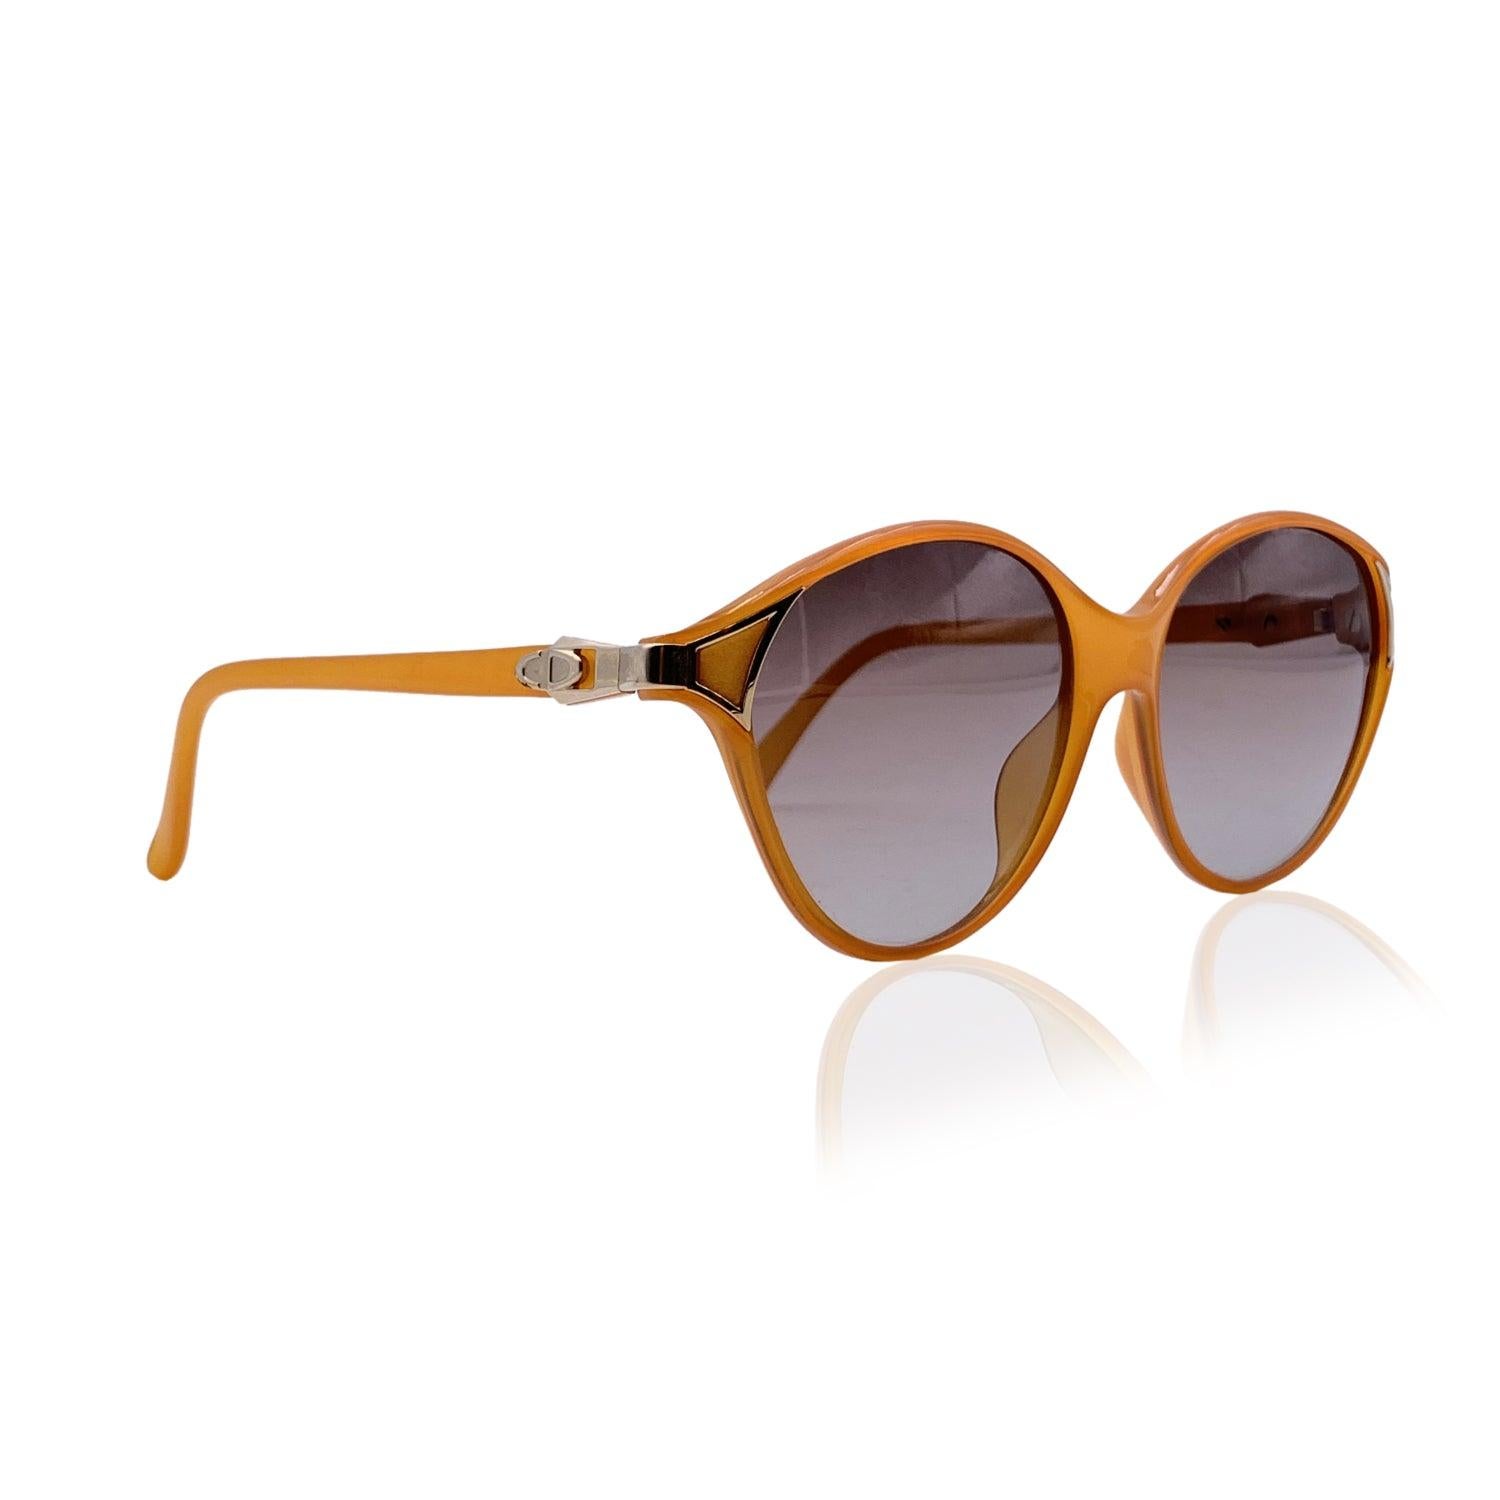 Vintage Christian Dior sunglasses, 2306 40. Orange Optyl frame. Gold metal accents. Cat-eye shape. Original 100% Total UVA/UVB protection gradient lenses in grey color. CD logo on temples. Made in Germany Details MATERIAL: Acetate COLOR: Orange